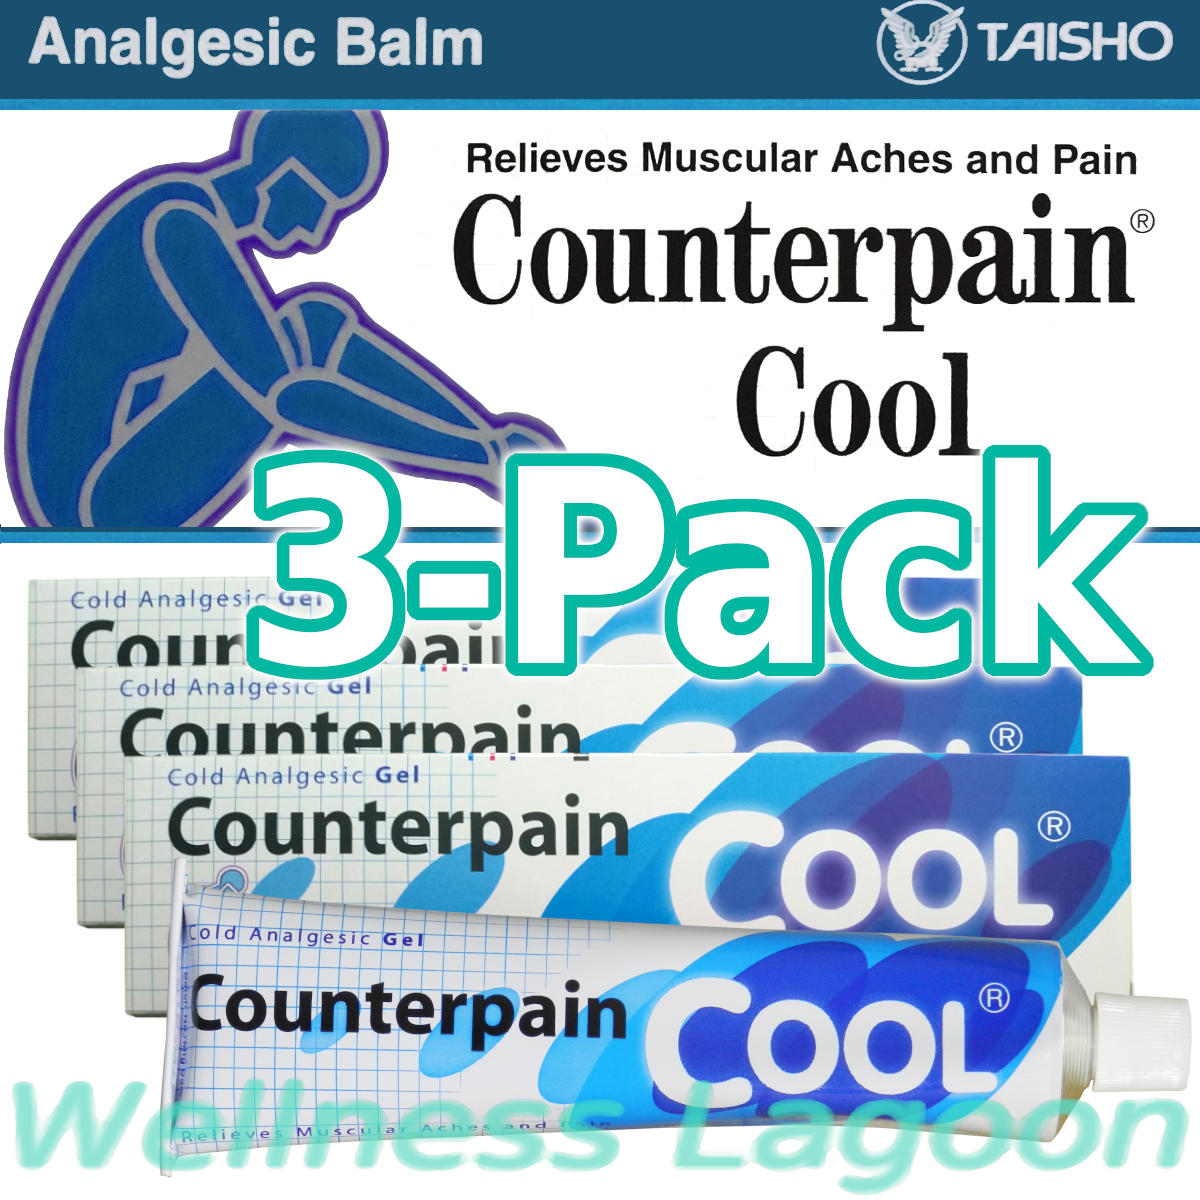 3x Taisho Counterpain Cool Gel (Blue) - 120g - Cold Analgesic Balm